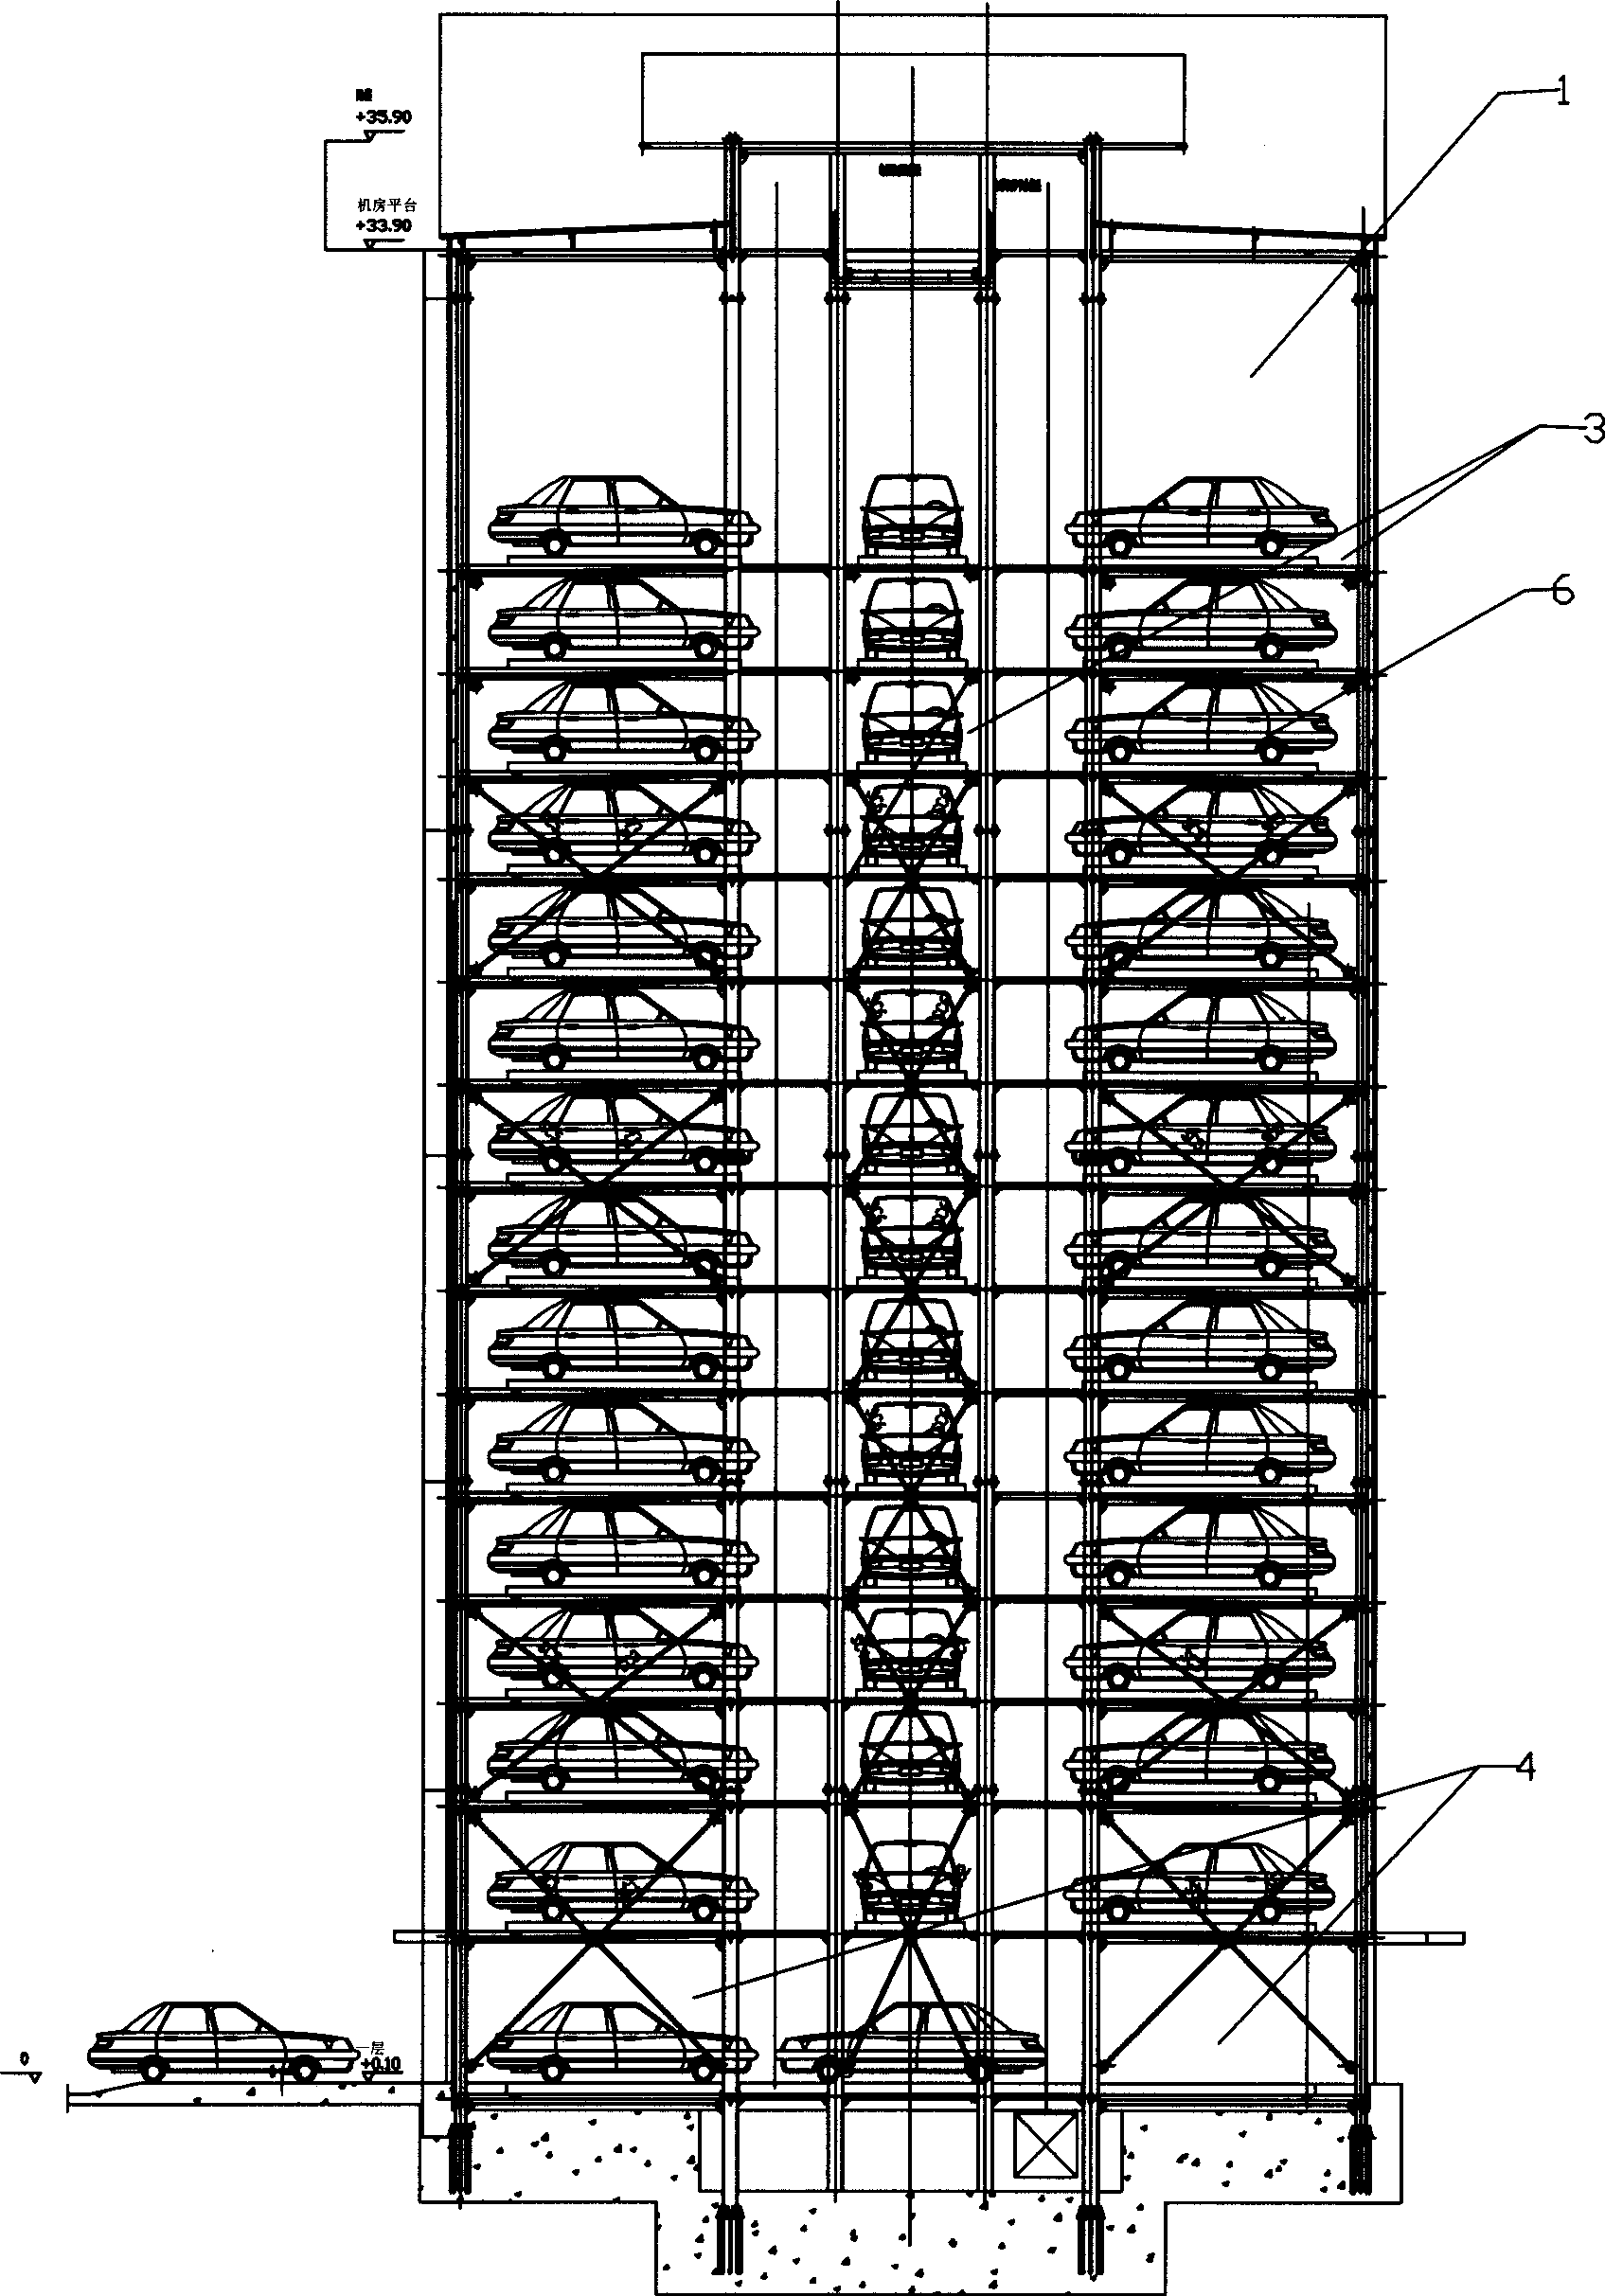 Multi-port cluster tower type multi-storied garage